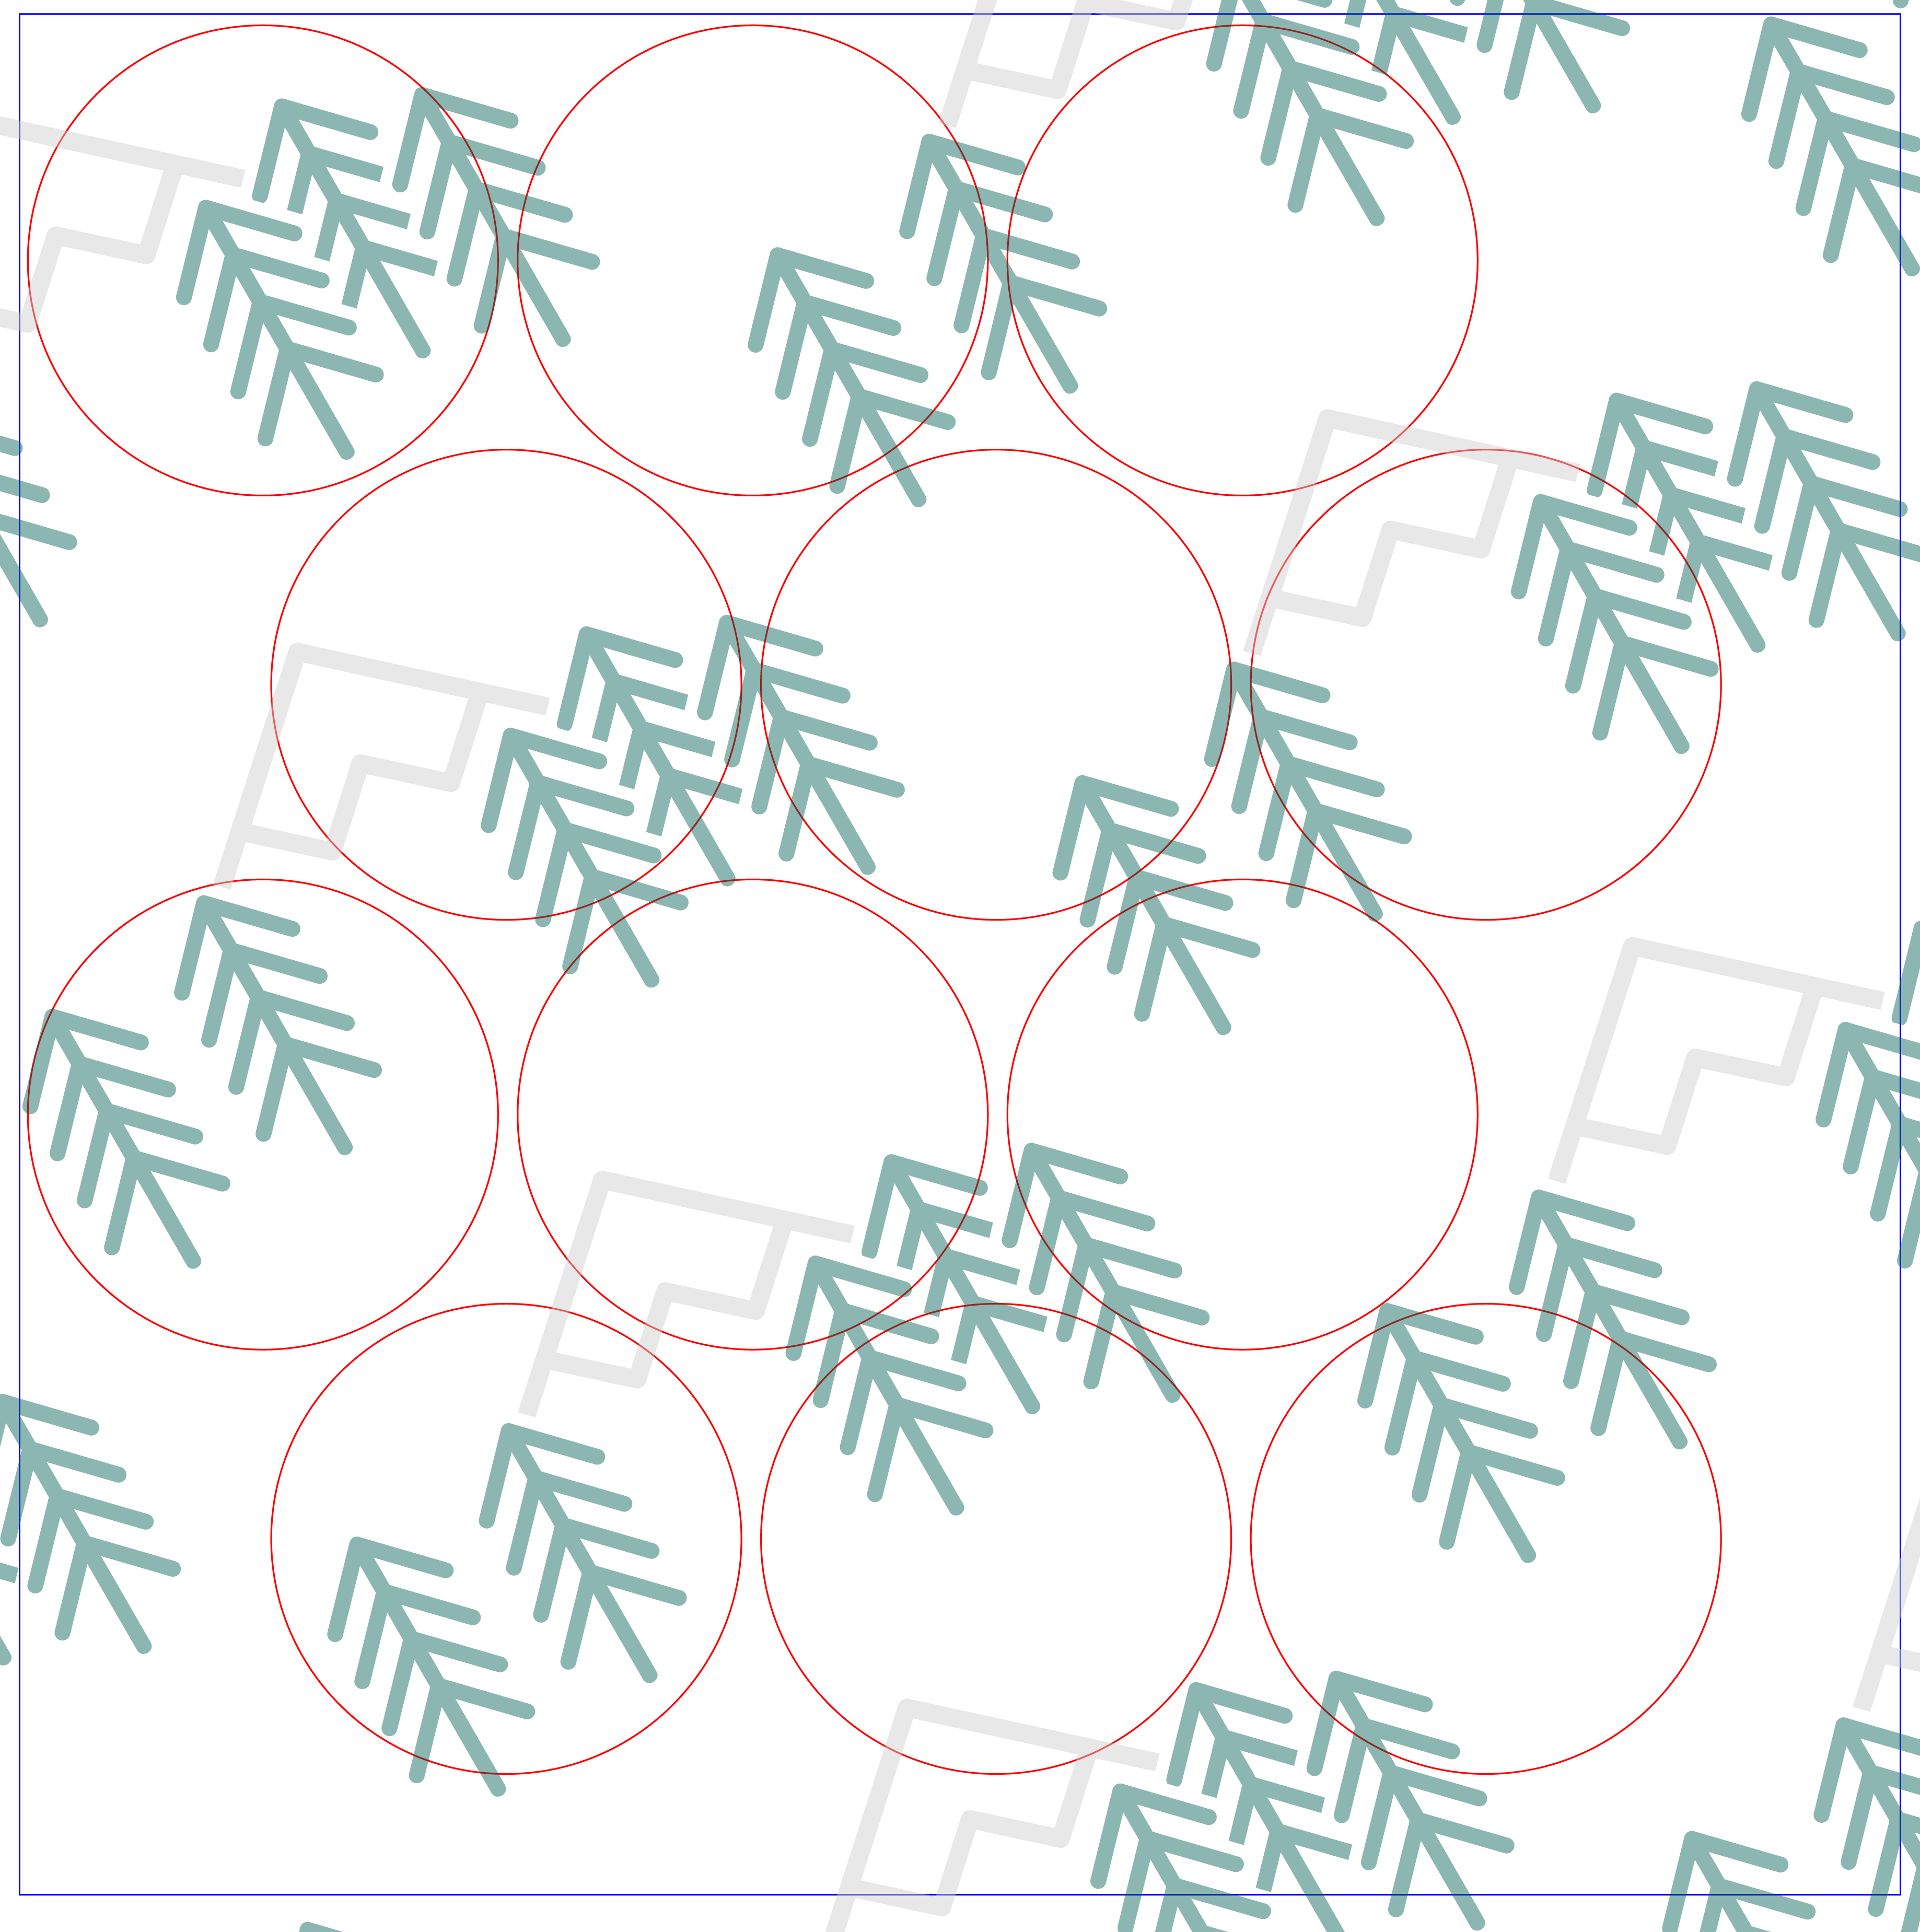 Digital Laser Cutting Template: 3" Circles - 12" x 12" Sheet Size Digital Laser Engraving Files Craftworks NW 